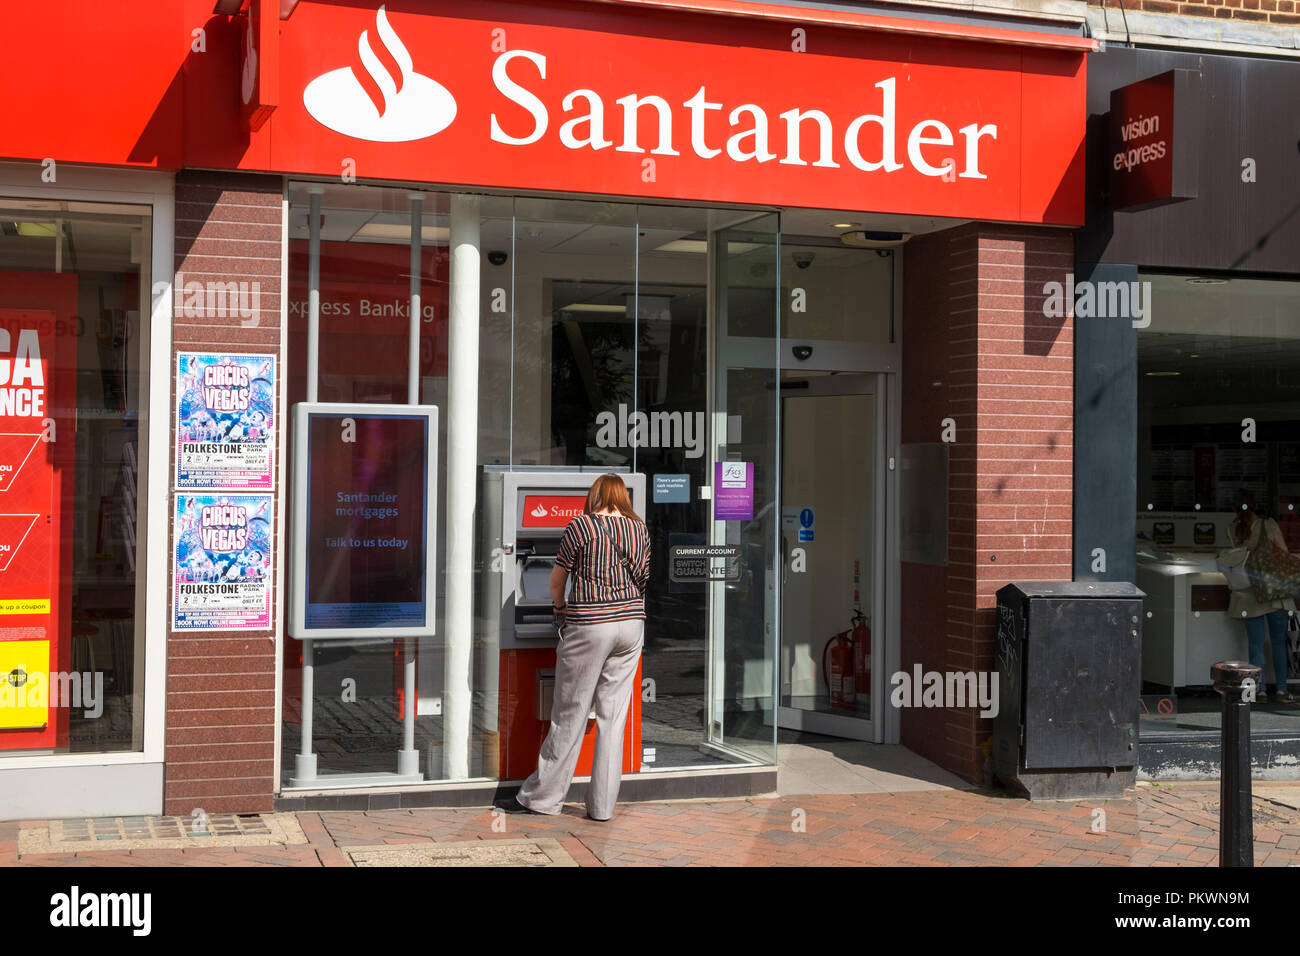 Santander bank with a woman at a cash point, ashford high street, kent, uk Stock Photo